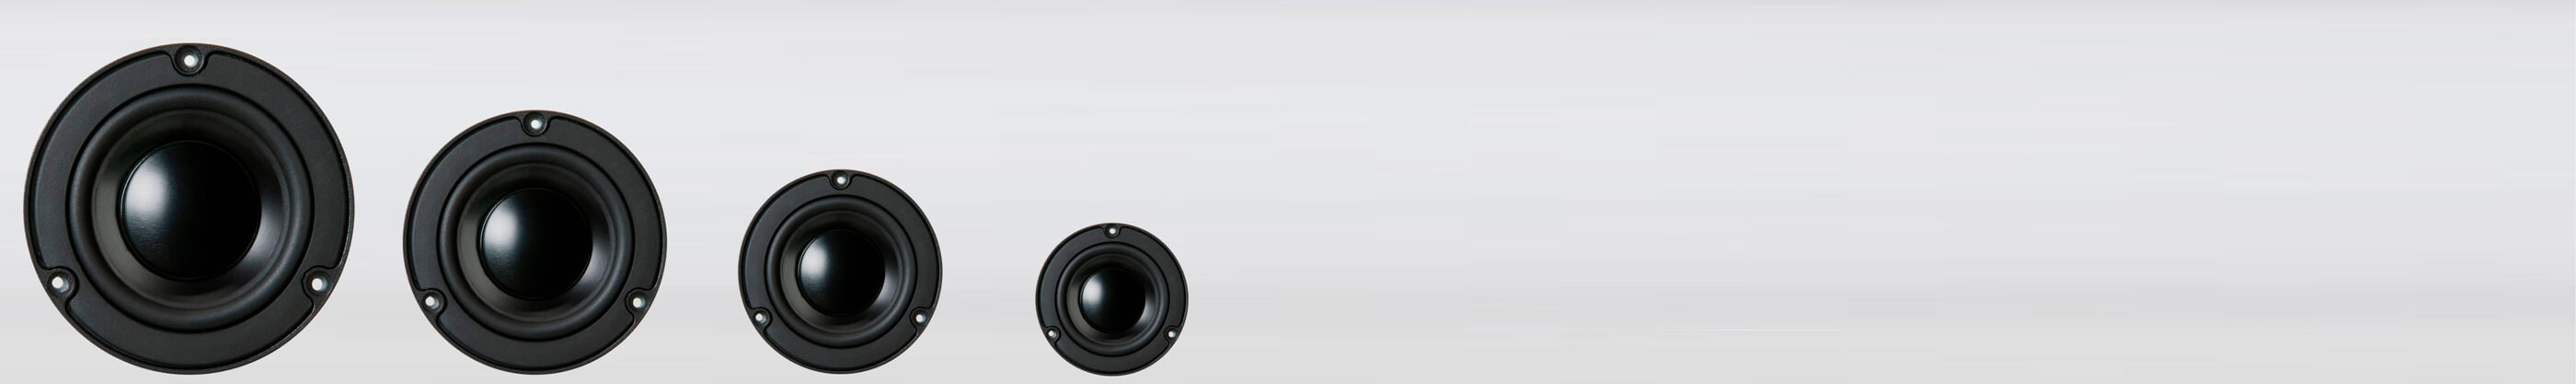 Vifa Speakers & Drive Units